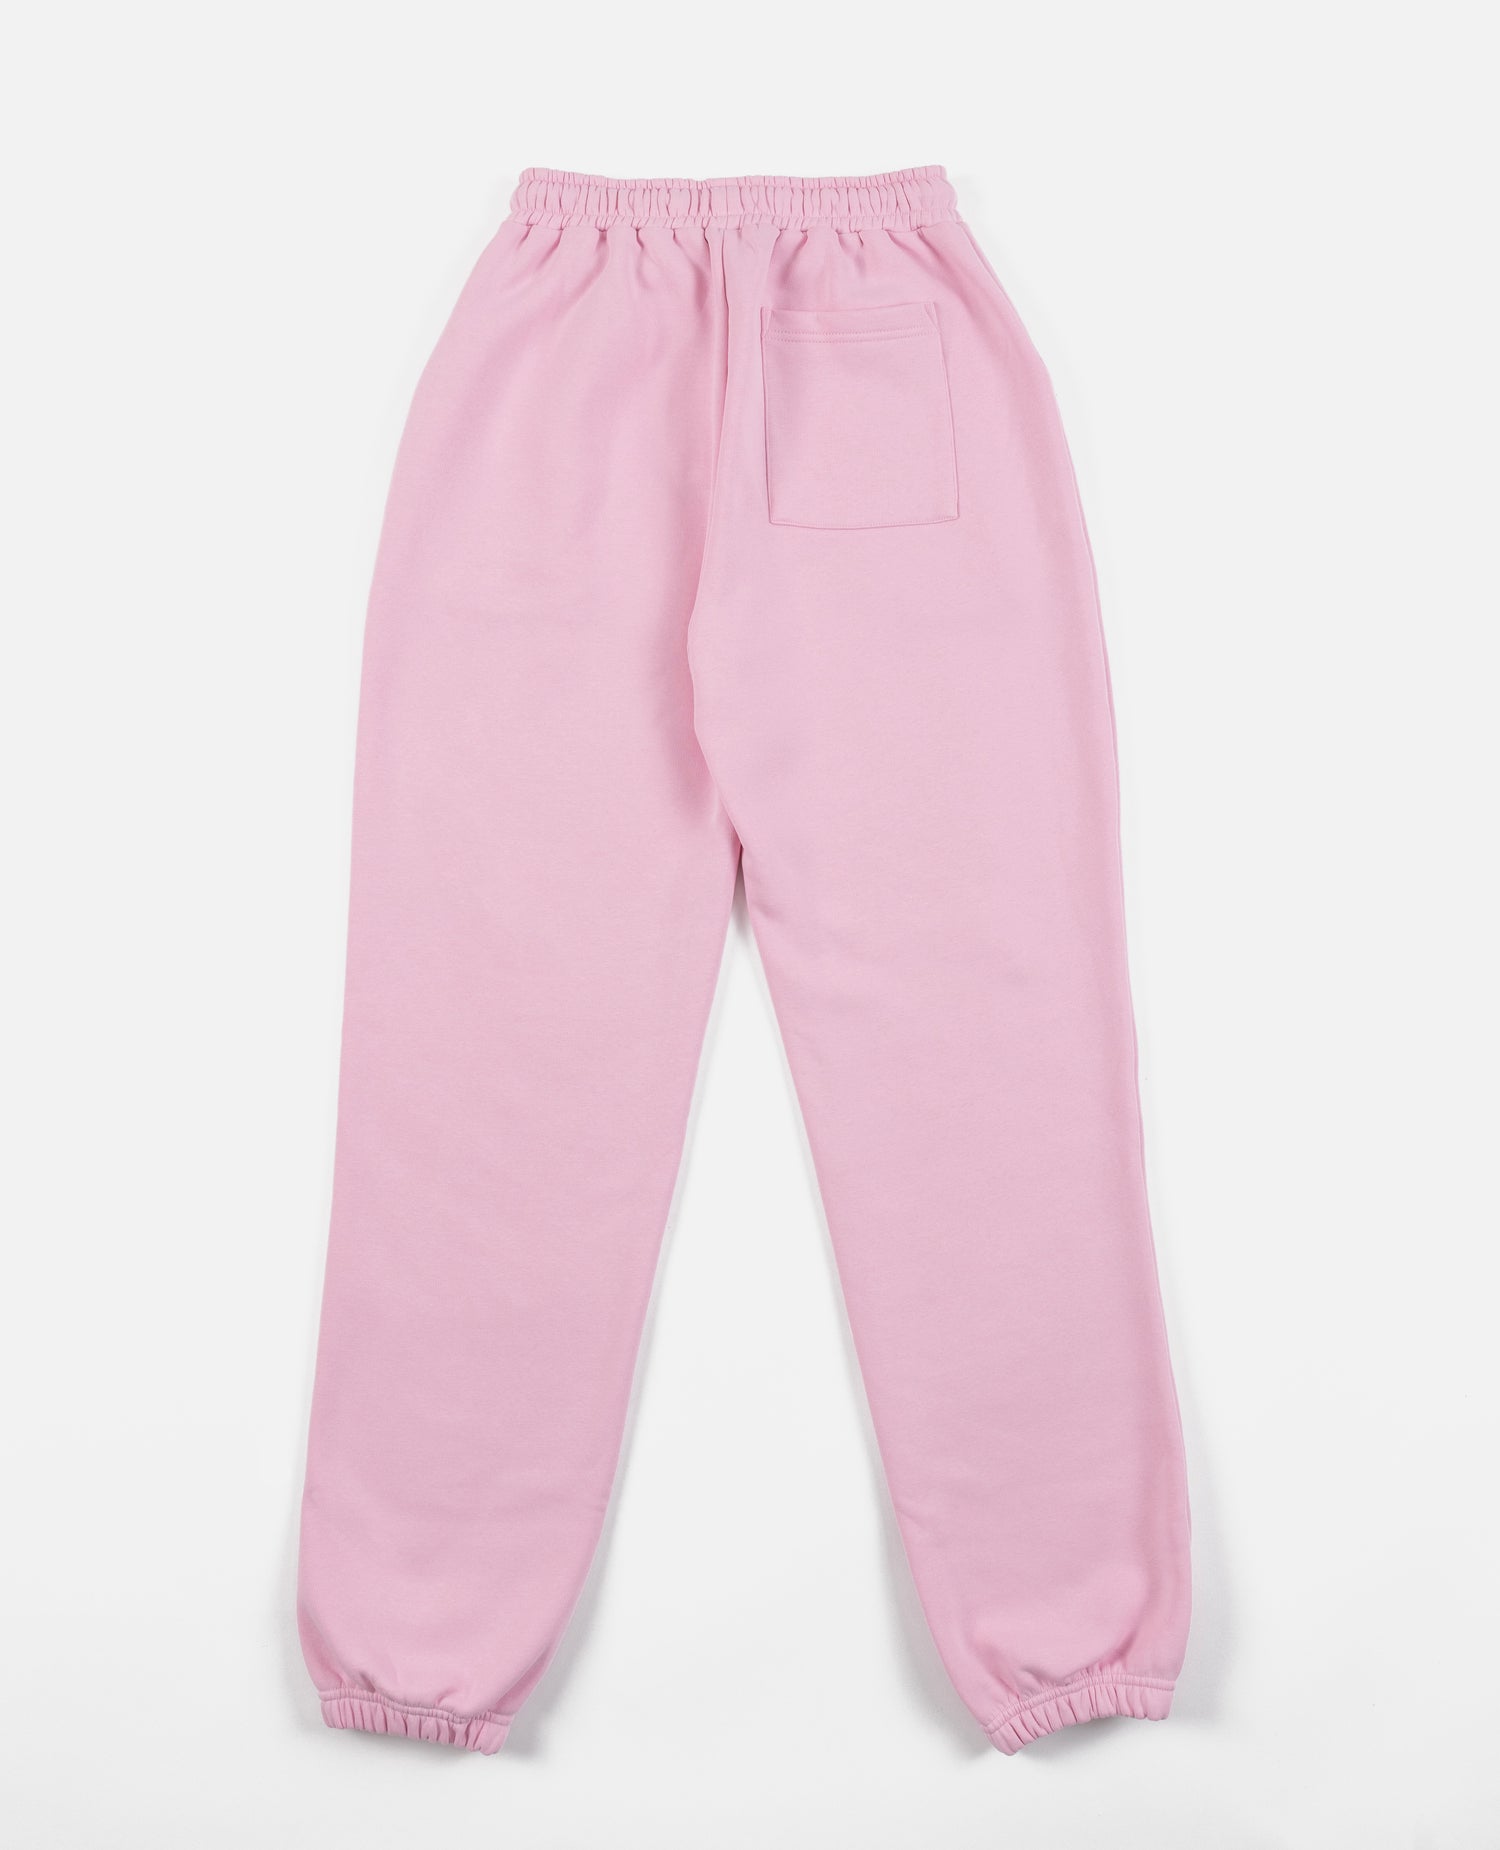 Patta Femme Basic Jogging Pants (Cradle Pink)